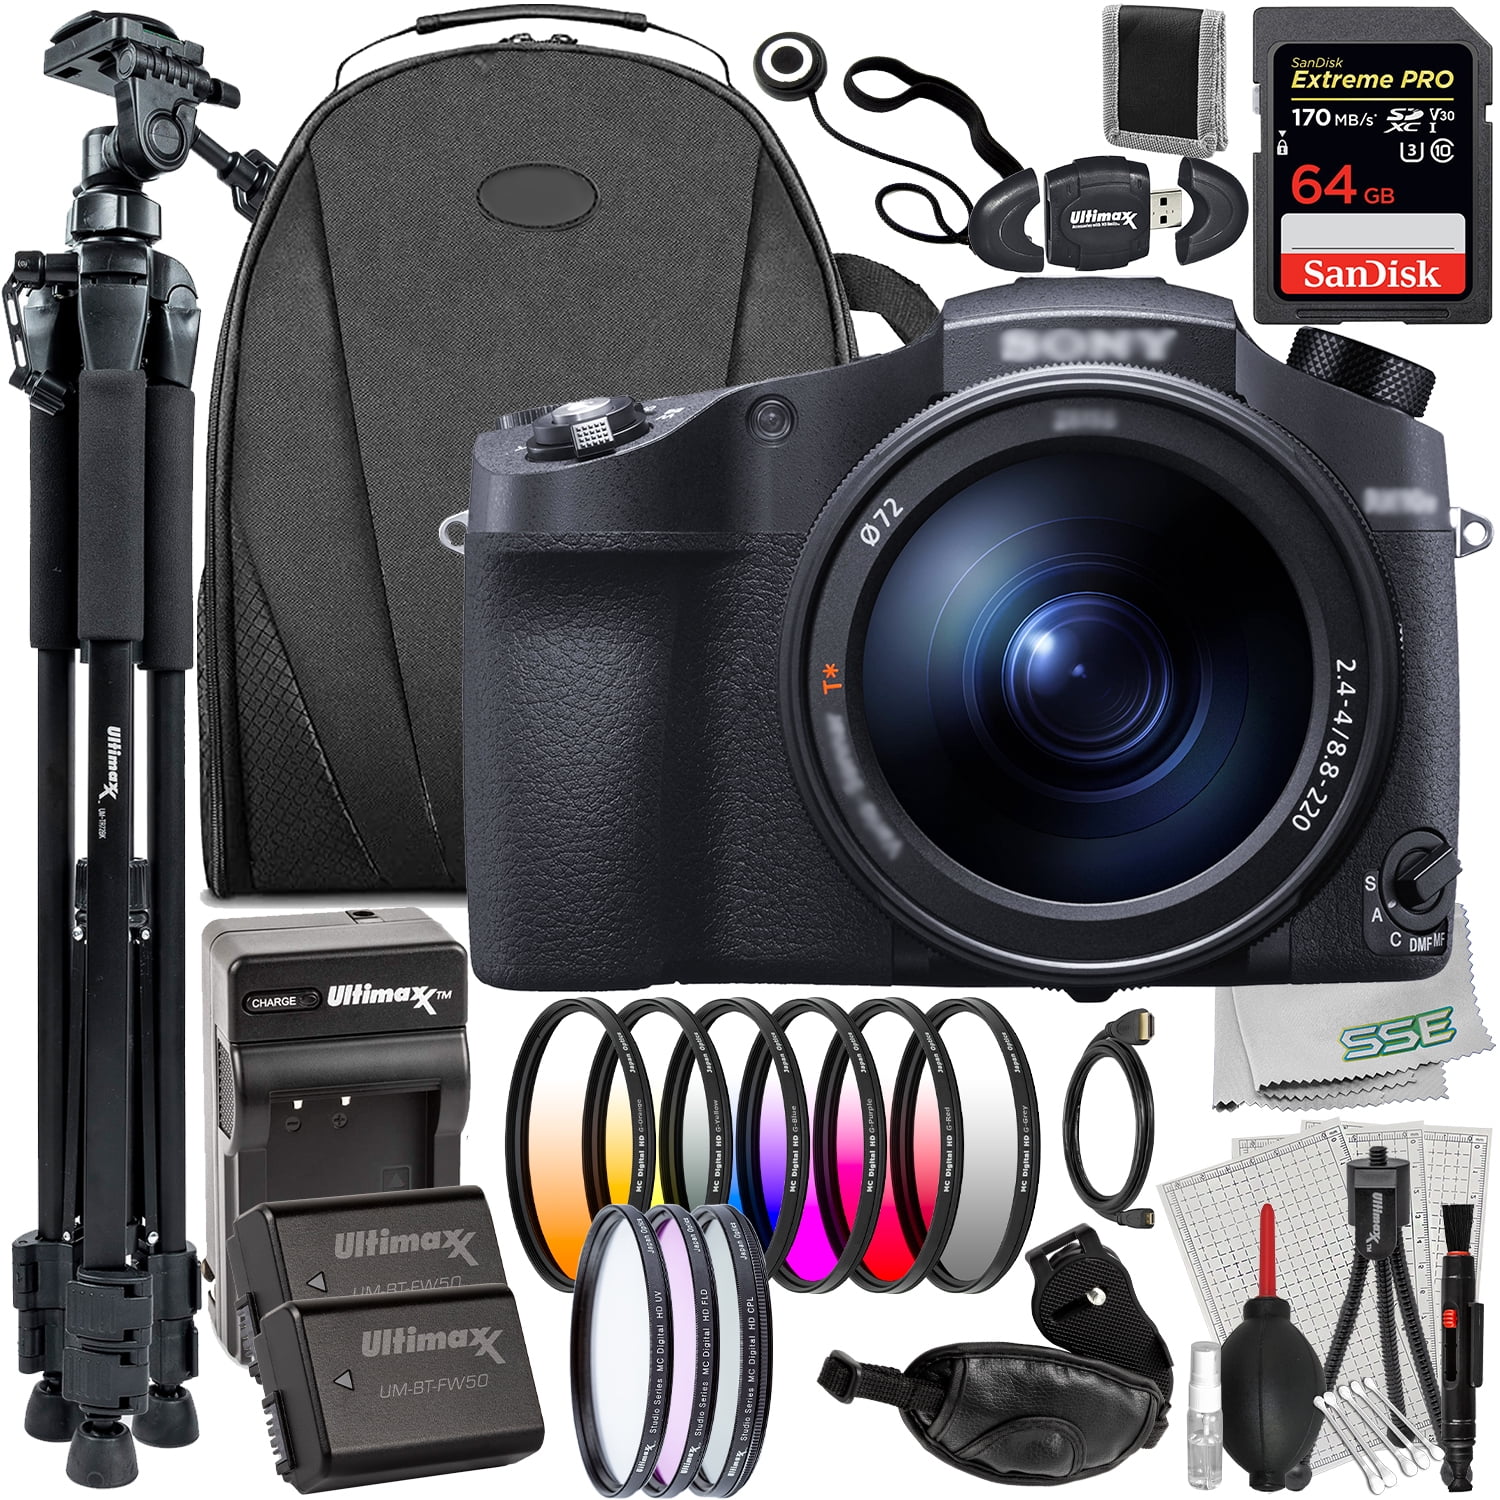 Sony Cyber-shot DSC-RX10 IV Digital Camera with Accessory Kit